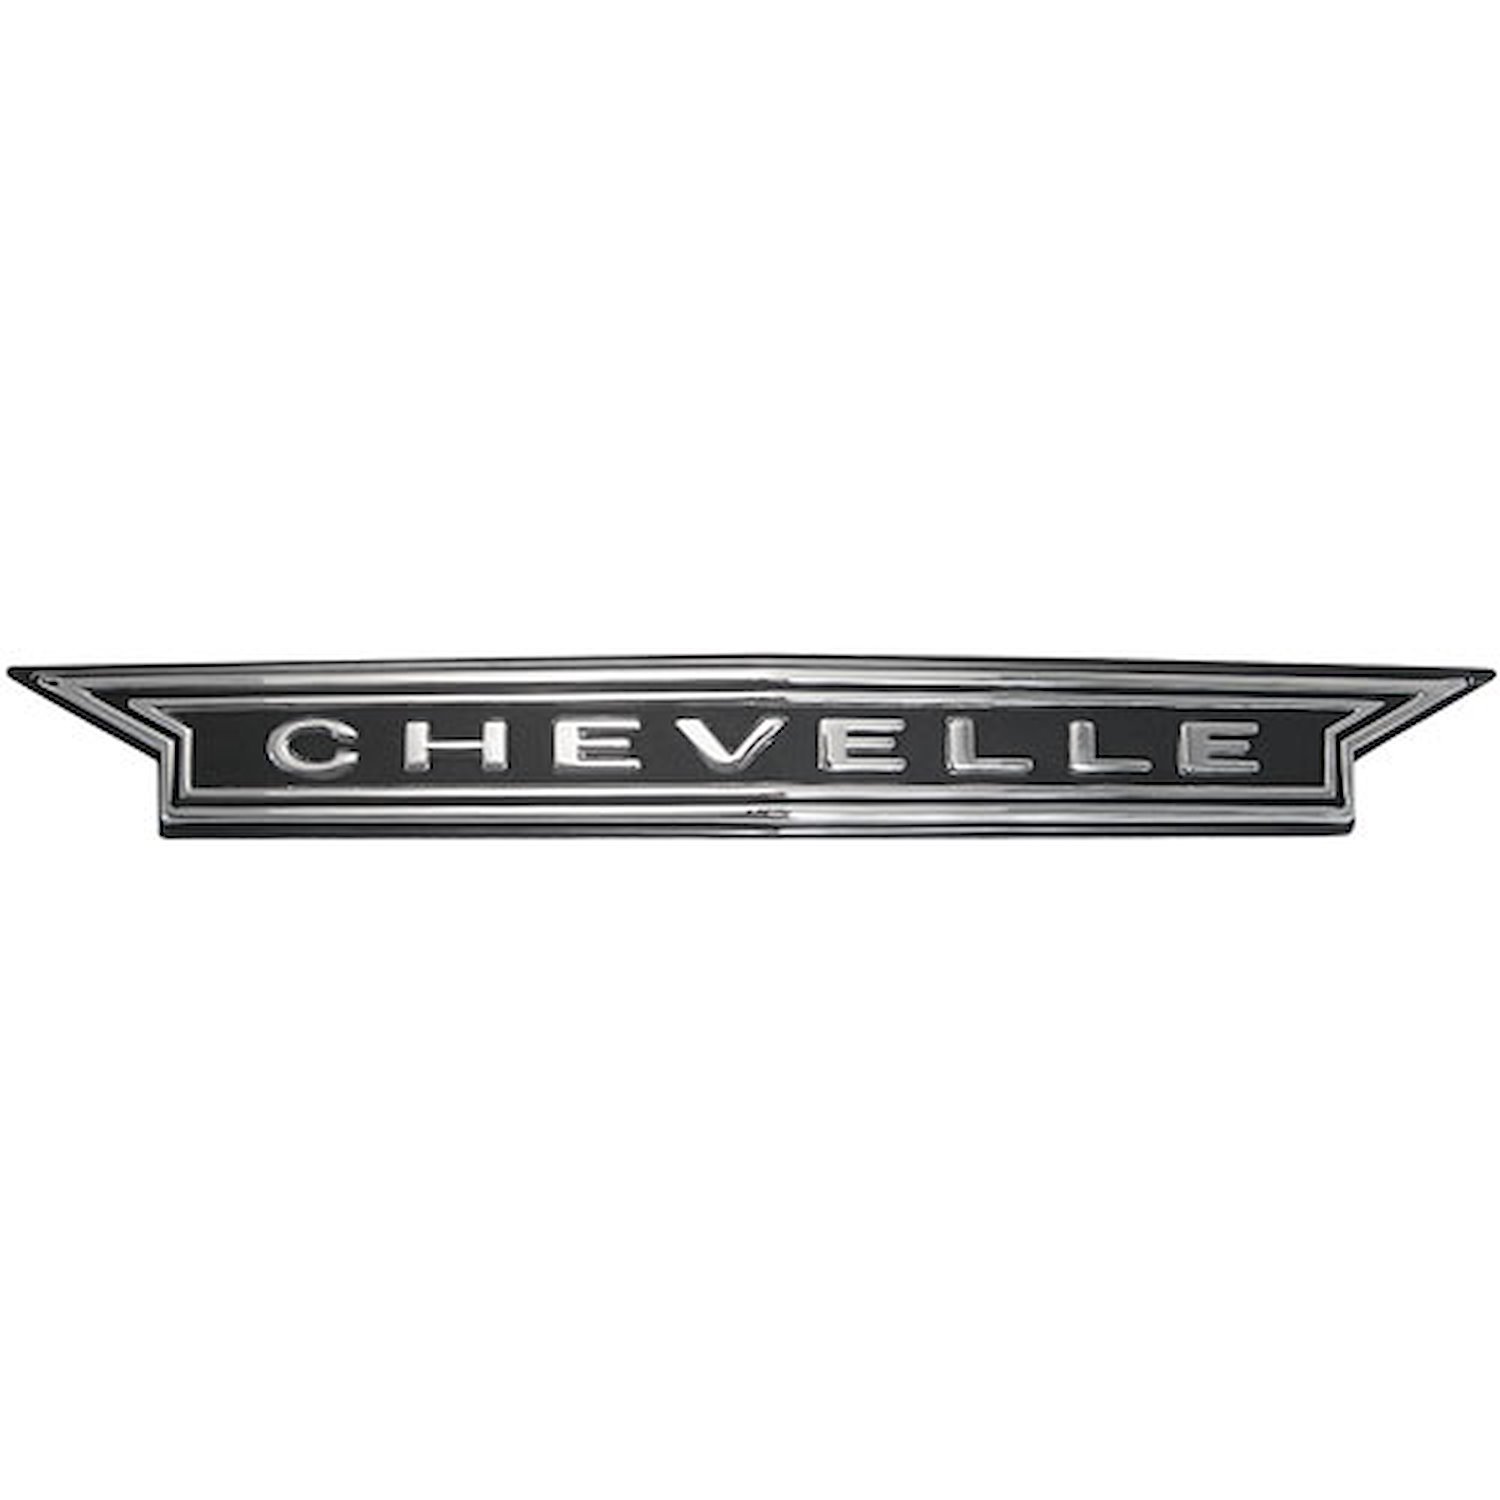 Grille Emblem 1966 Chevy Chevelle